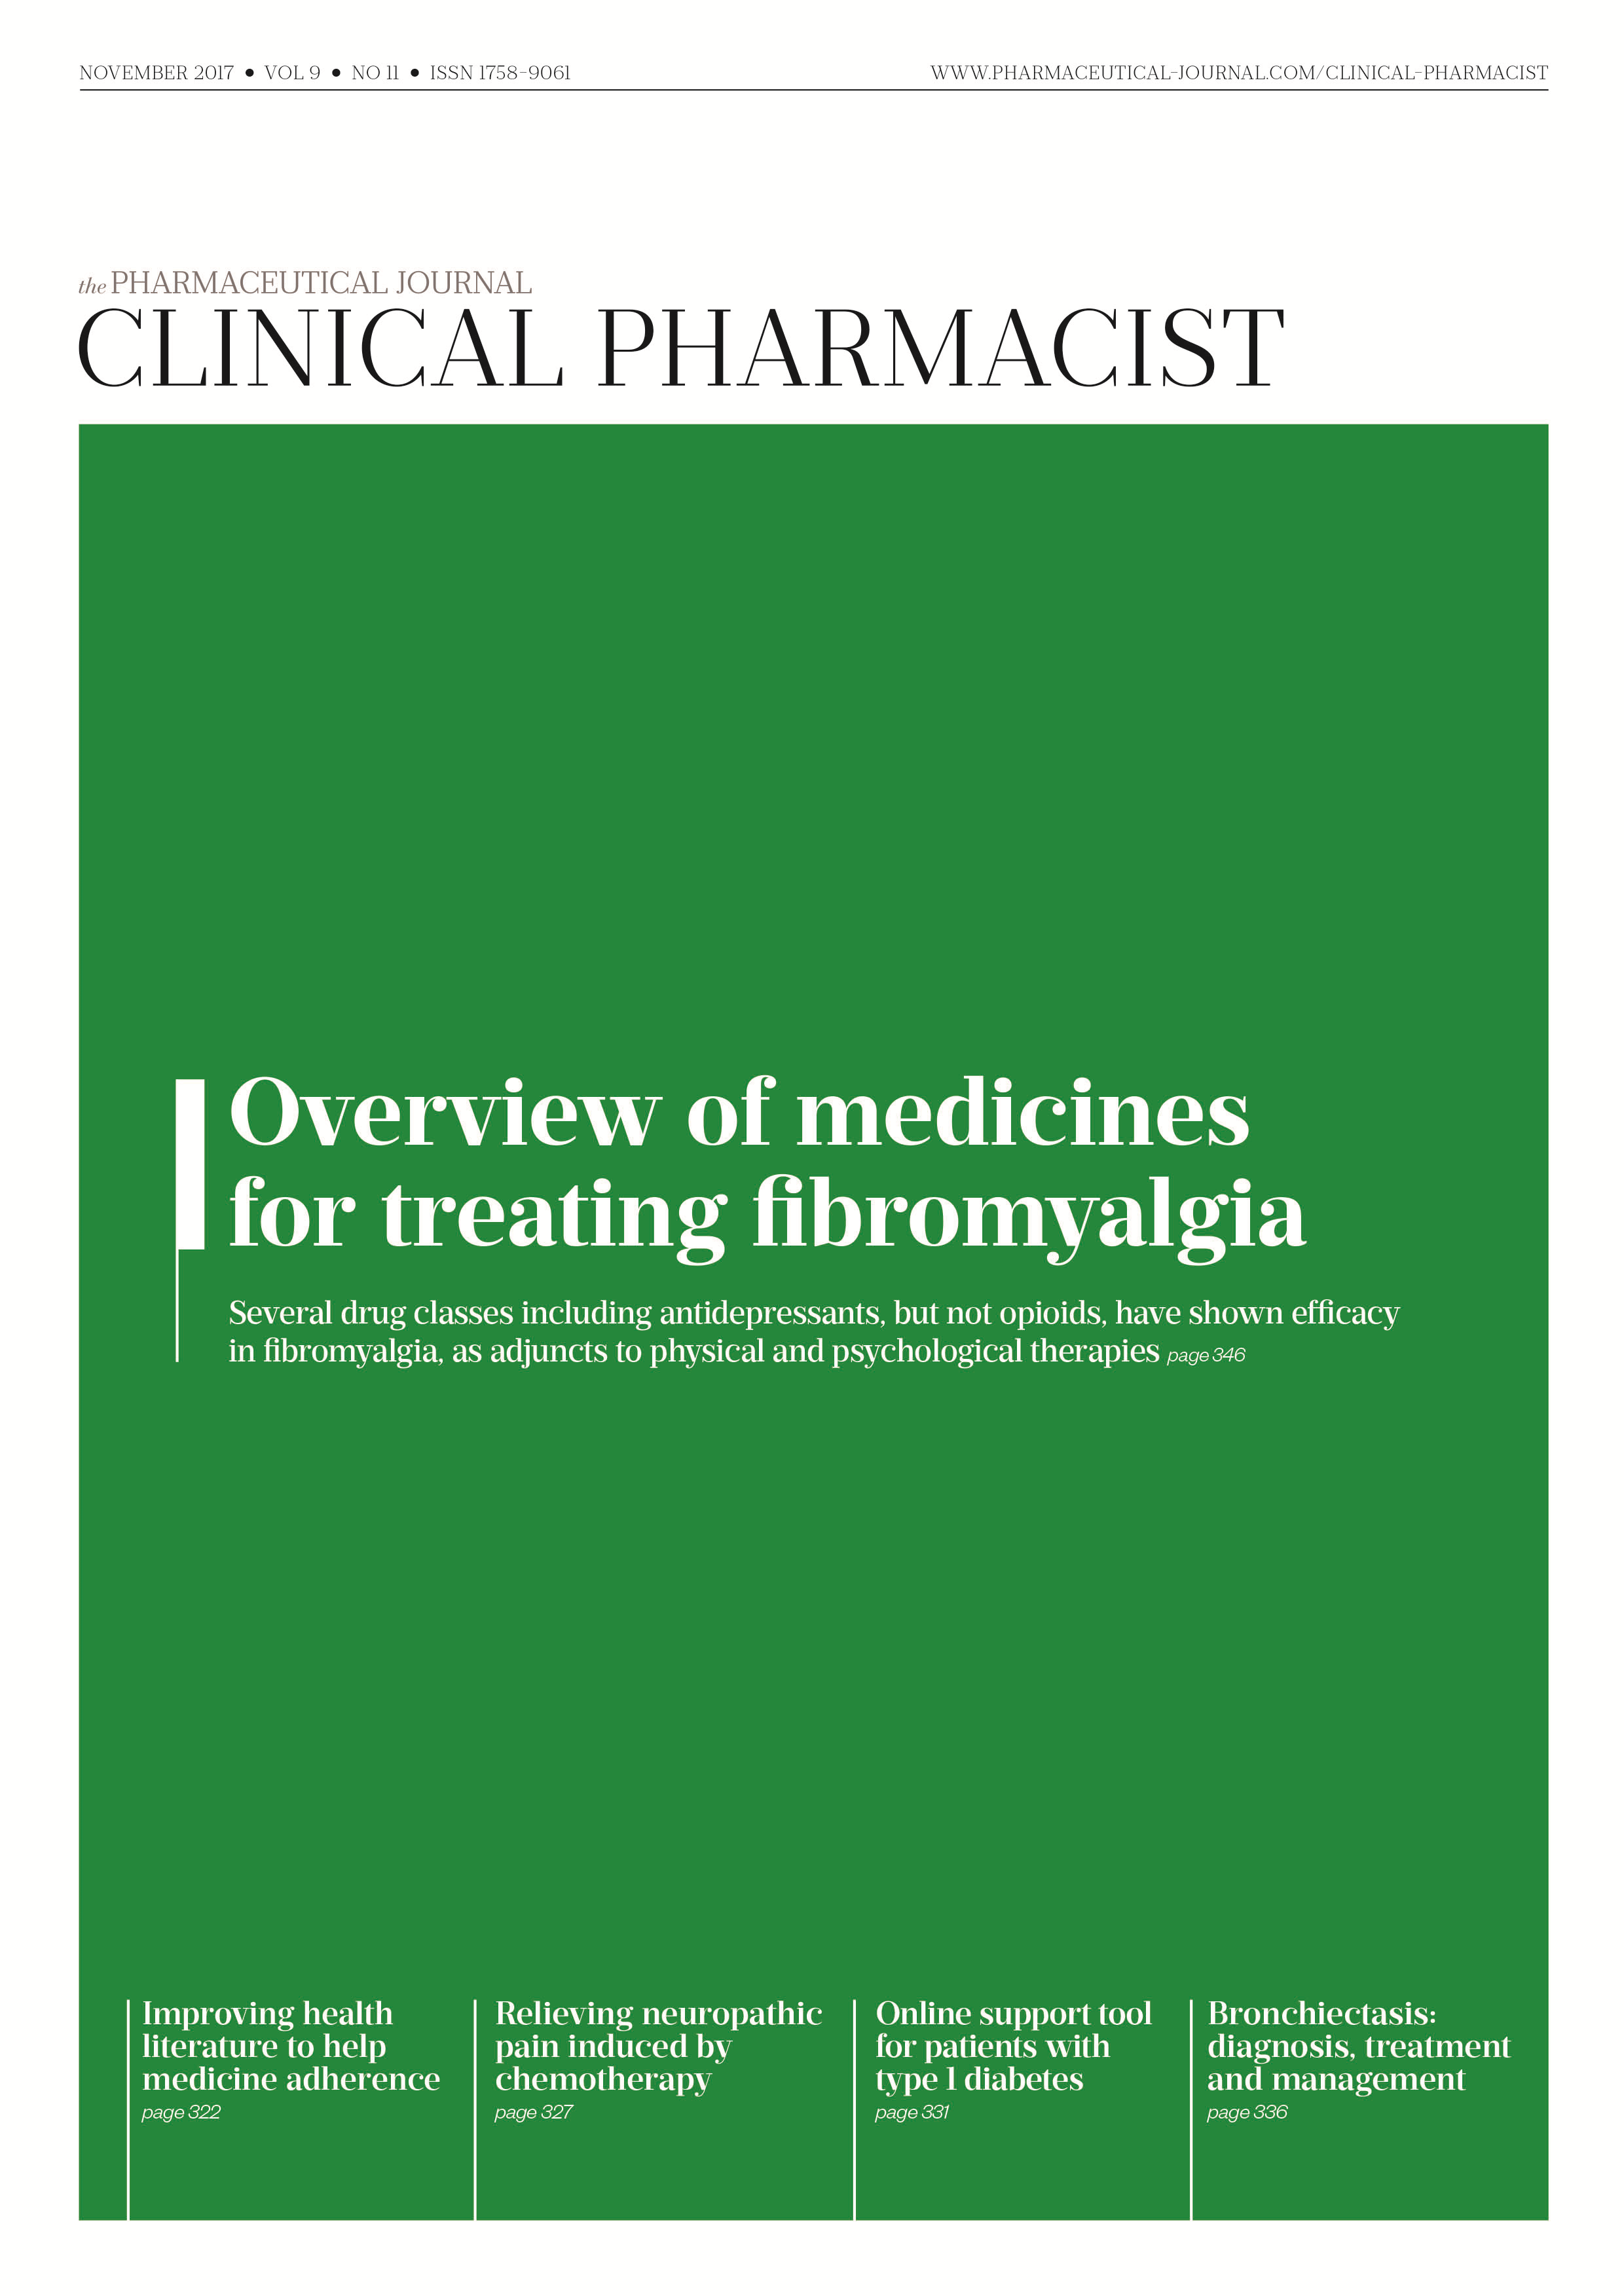 Publication issue cover for CP, November 2017, Vol 9, No 11